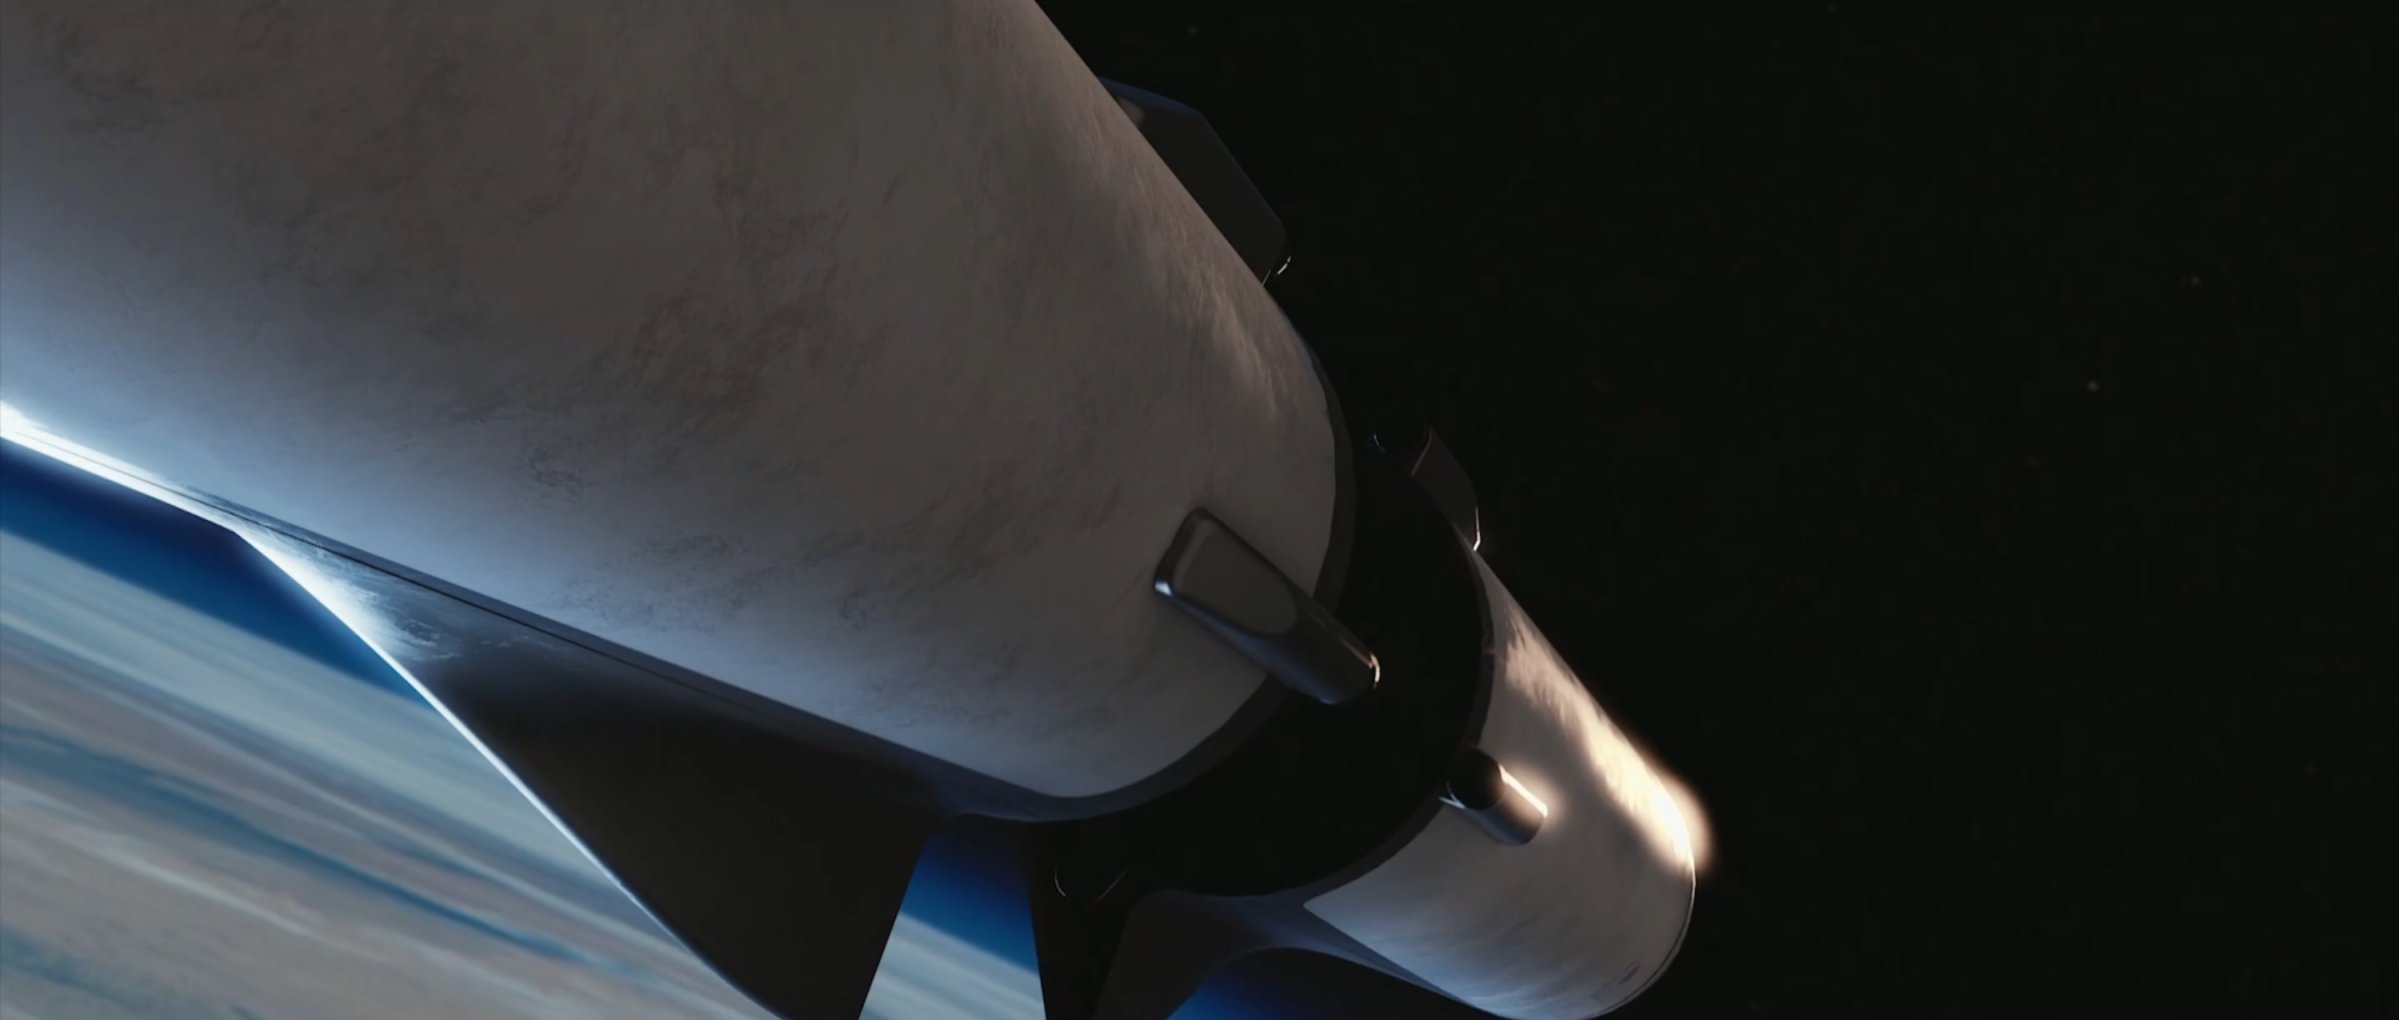 BFR refueling on orbit (SpaceX)